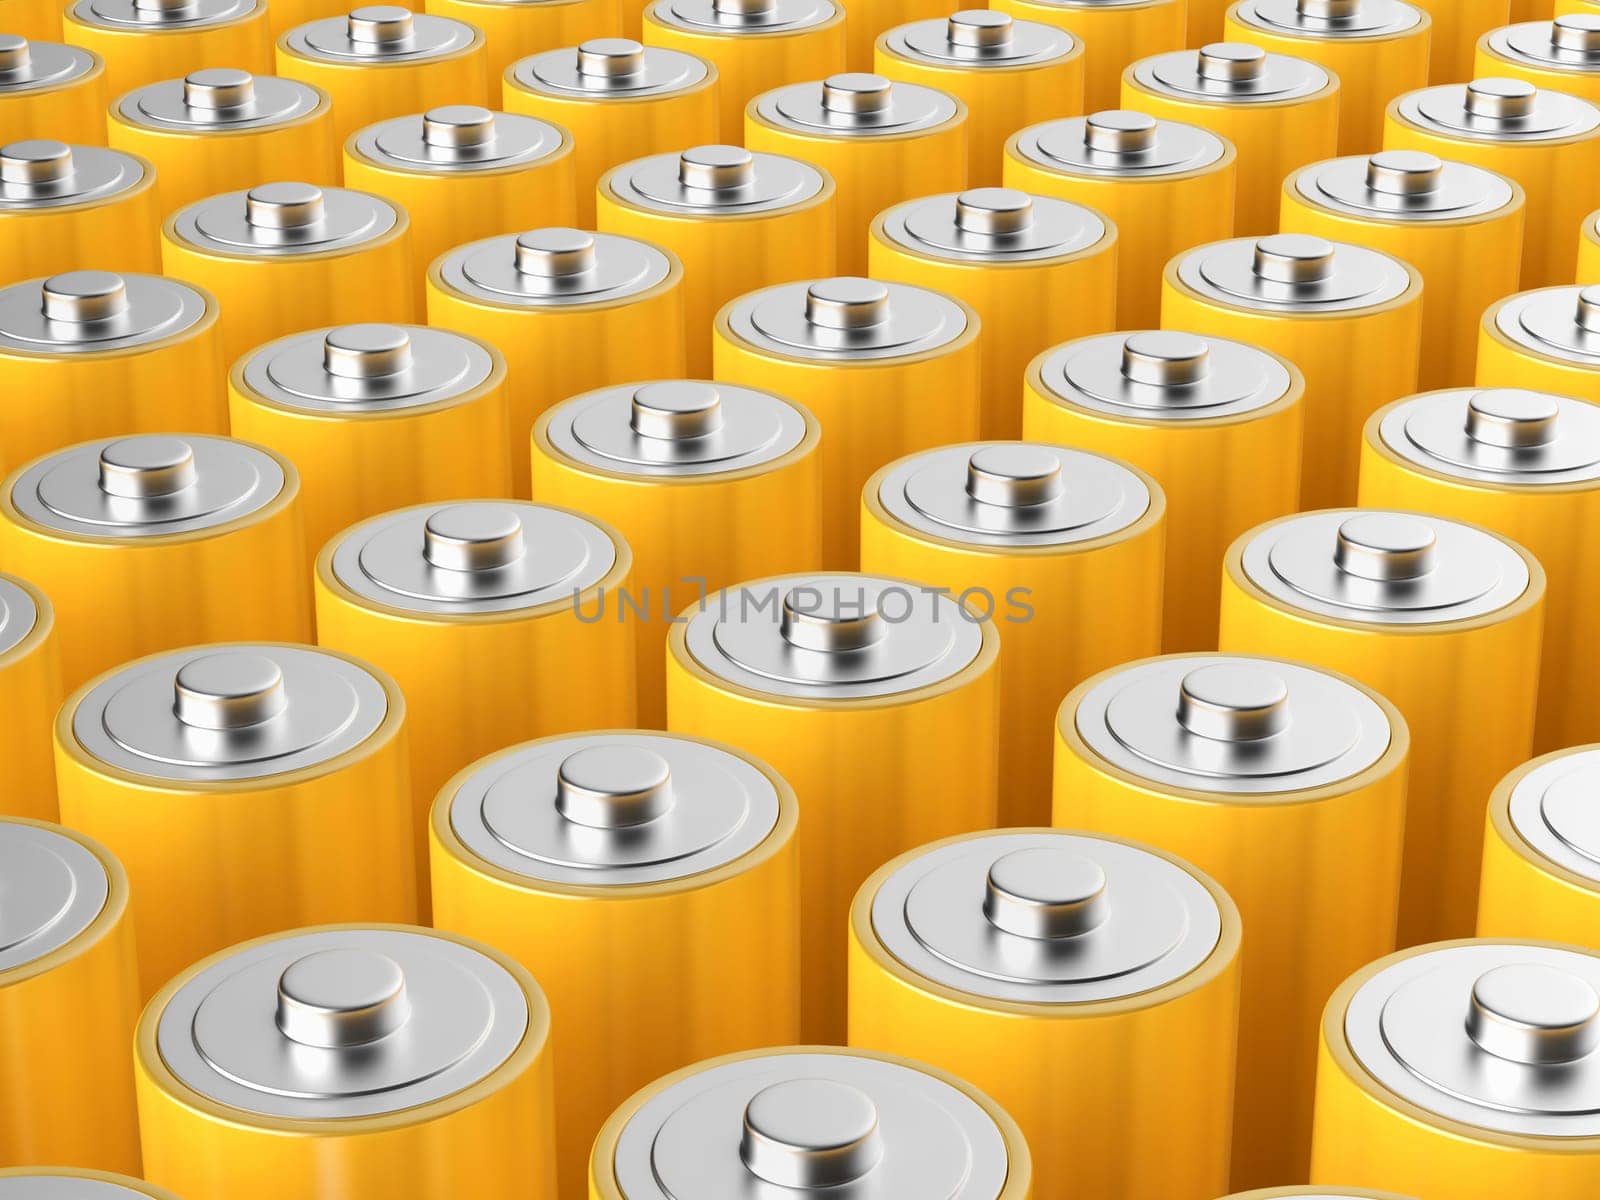 Many yellow AA size batteries